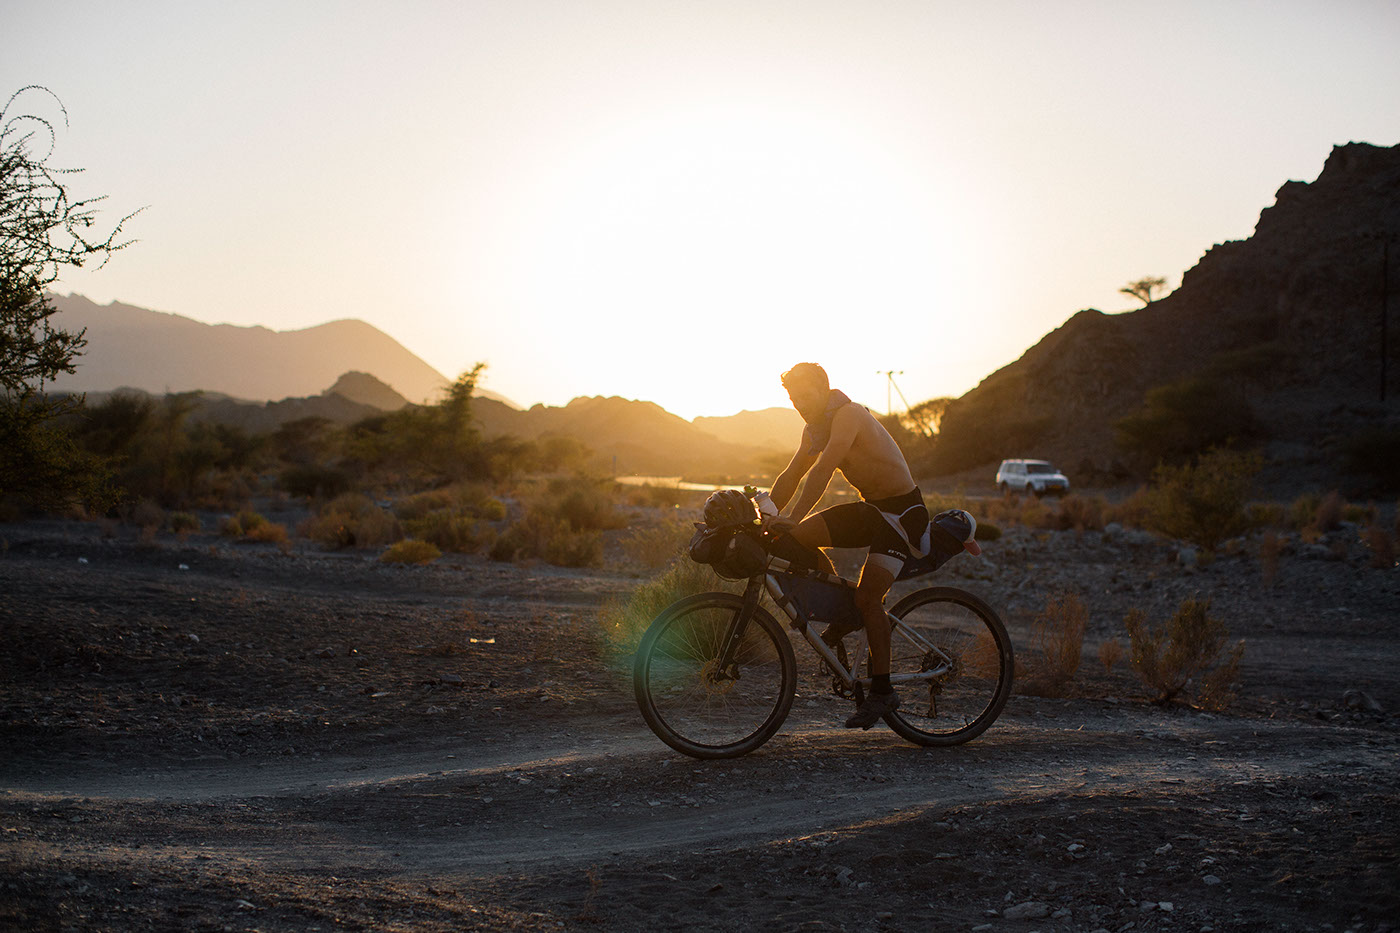 Oman Mascate desert Bike Travel journey trekking Bicycle Trek